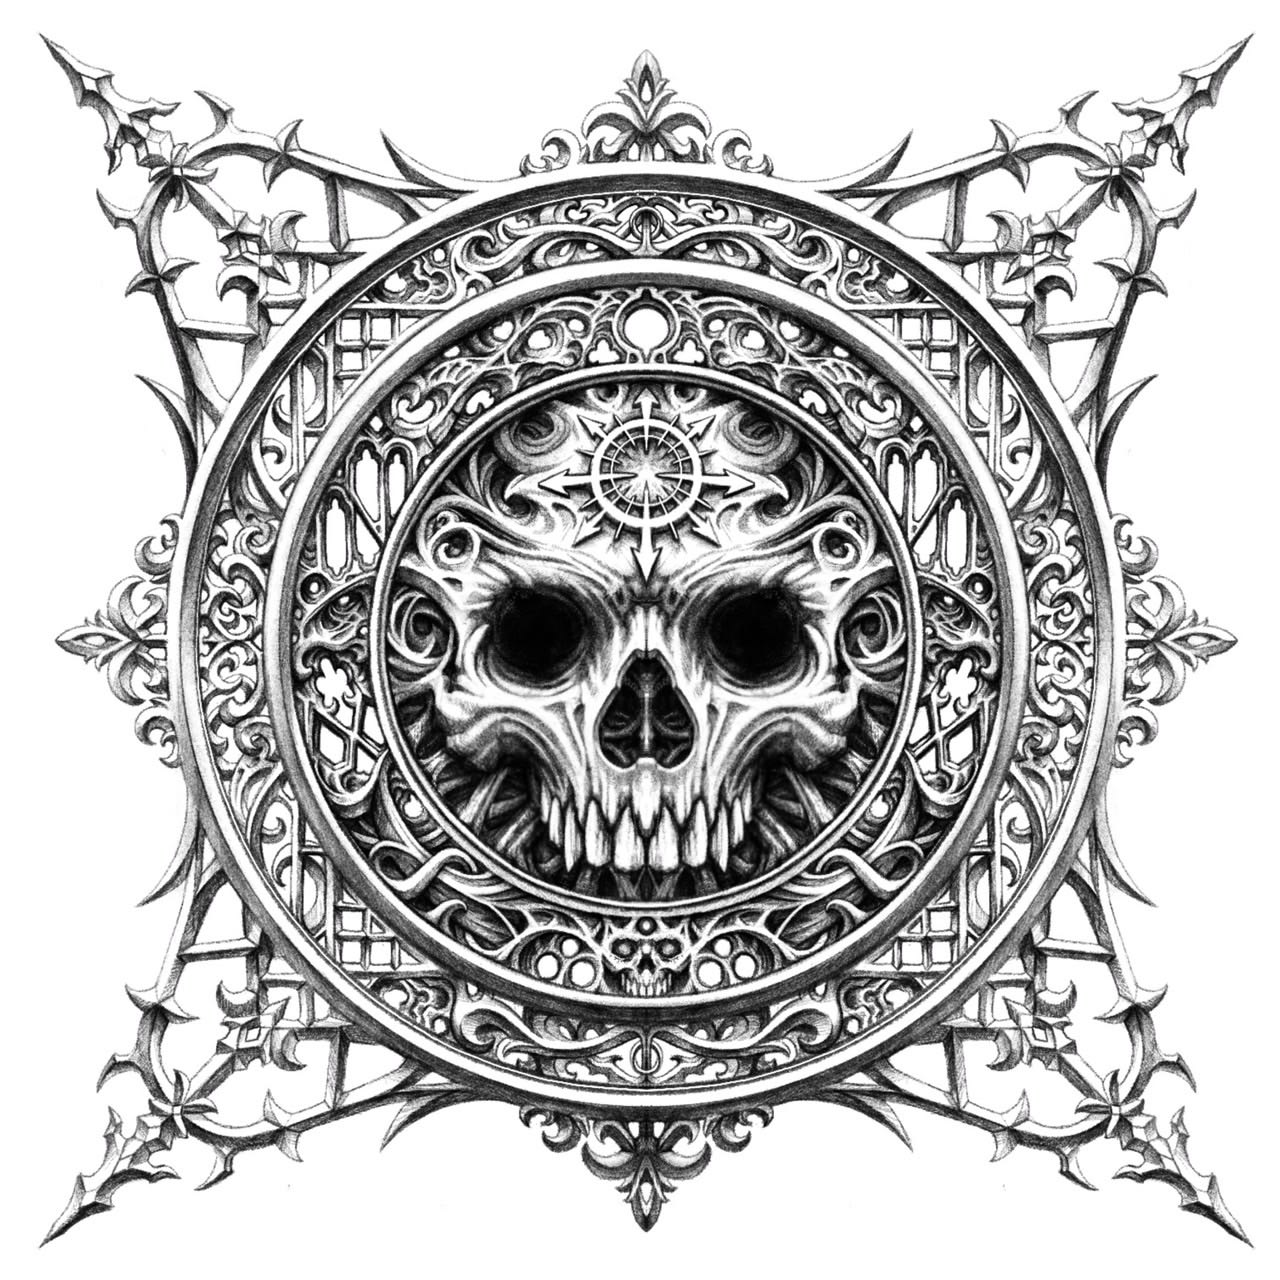 Make u a dark gothic styled blackwork tattoo design by Garsiauw